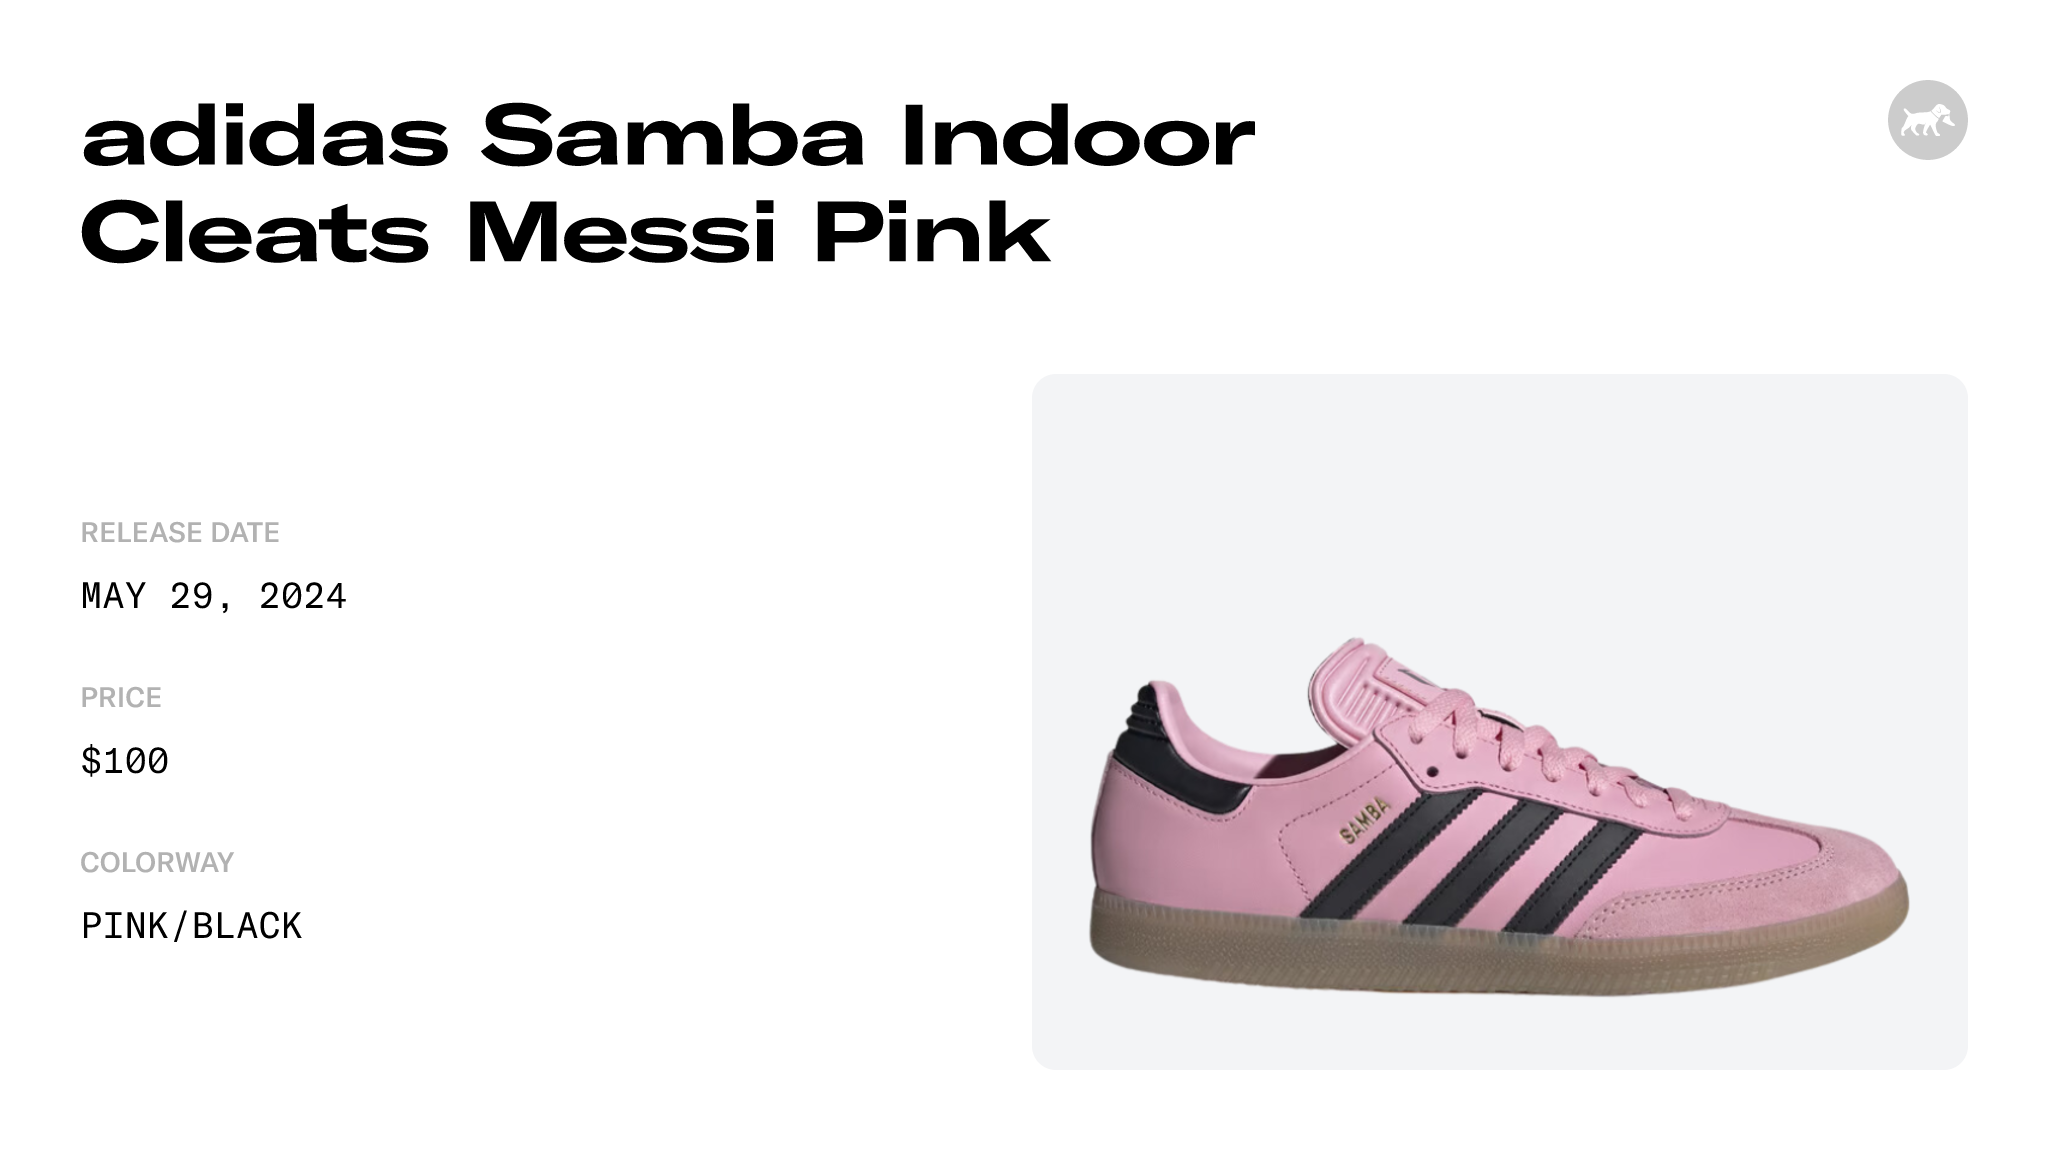 adidas Samba Indoor Cleats Messi Pink - IH8158 Raffles and Release Date